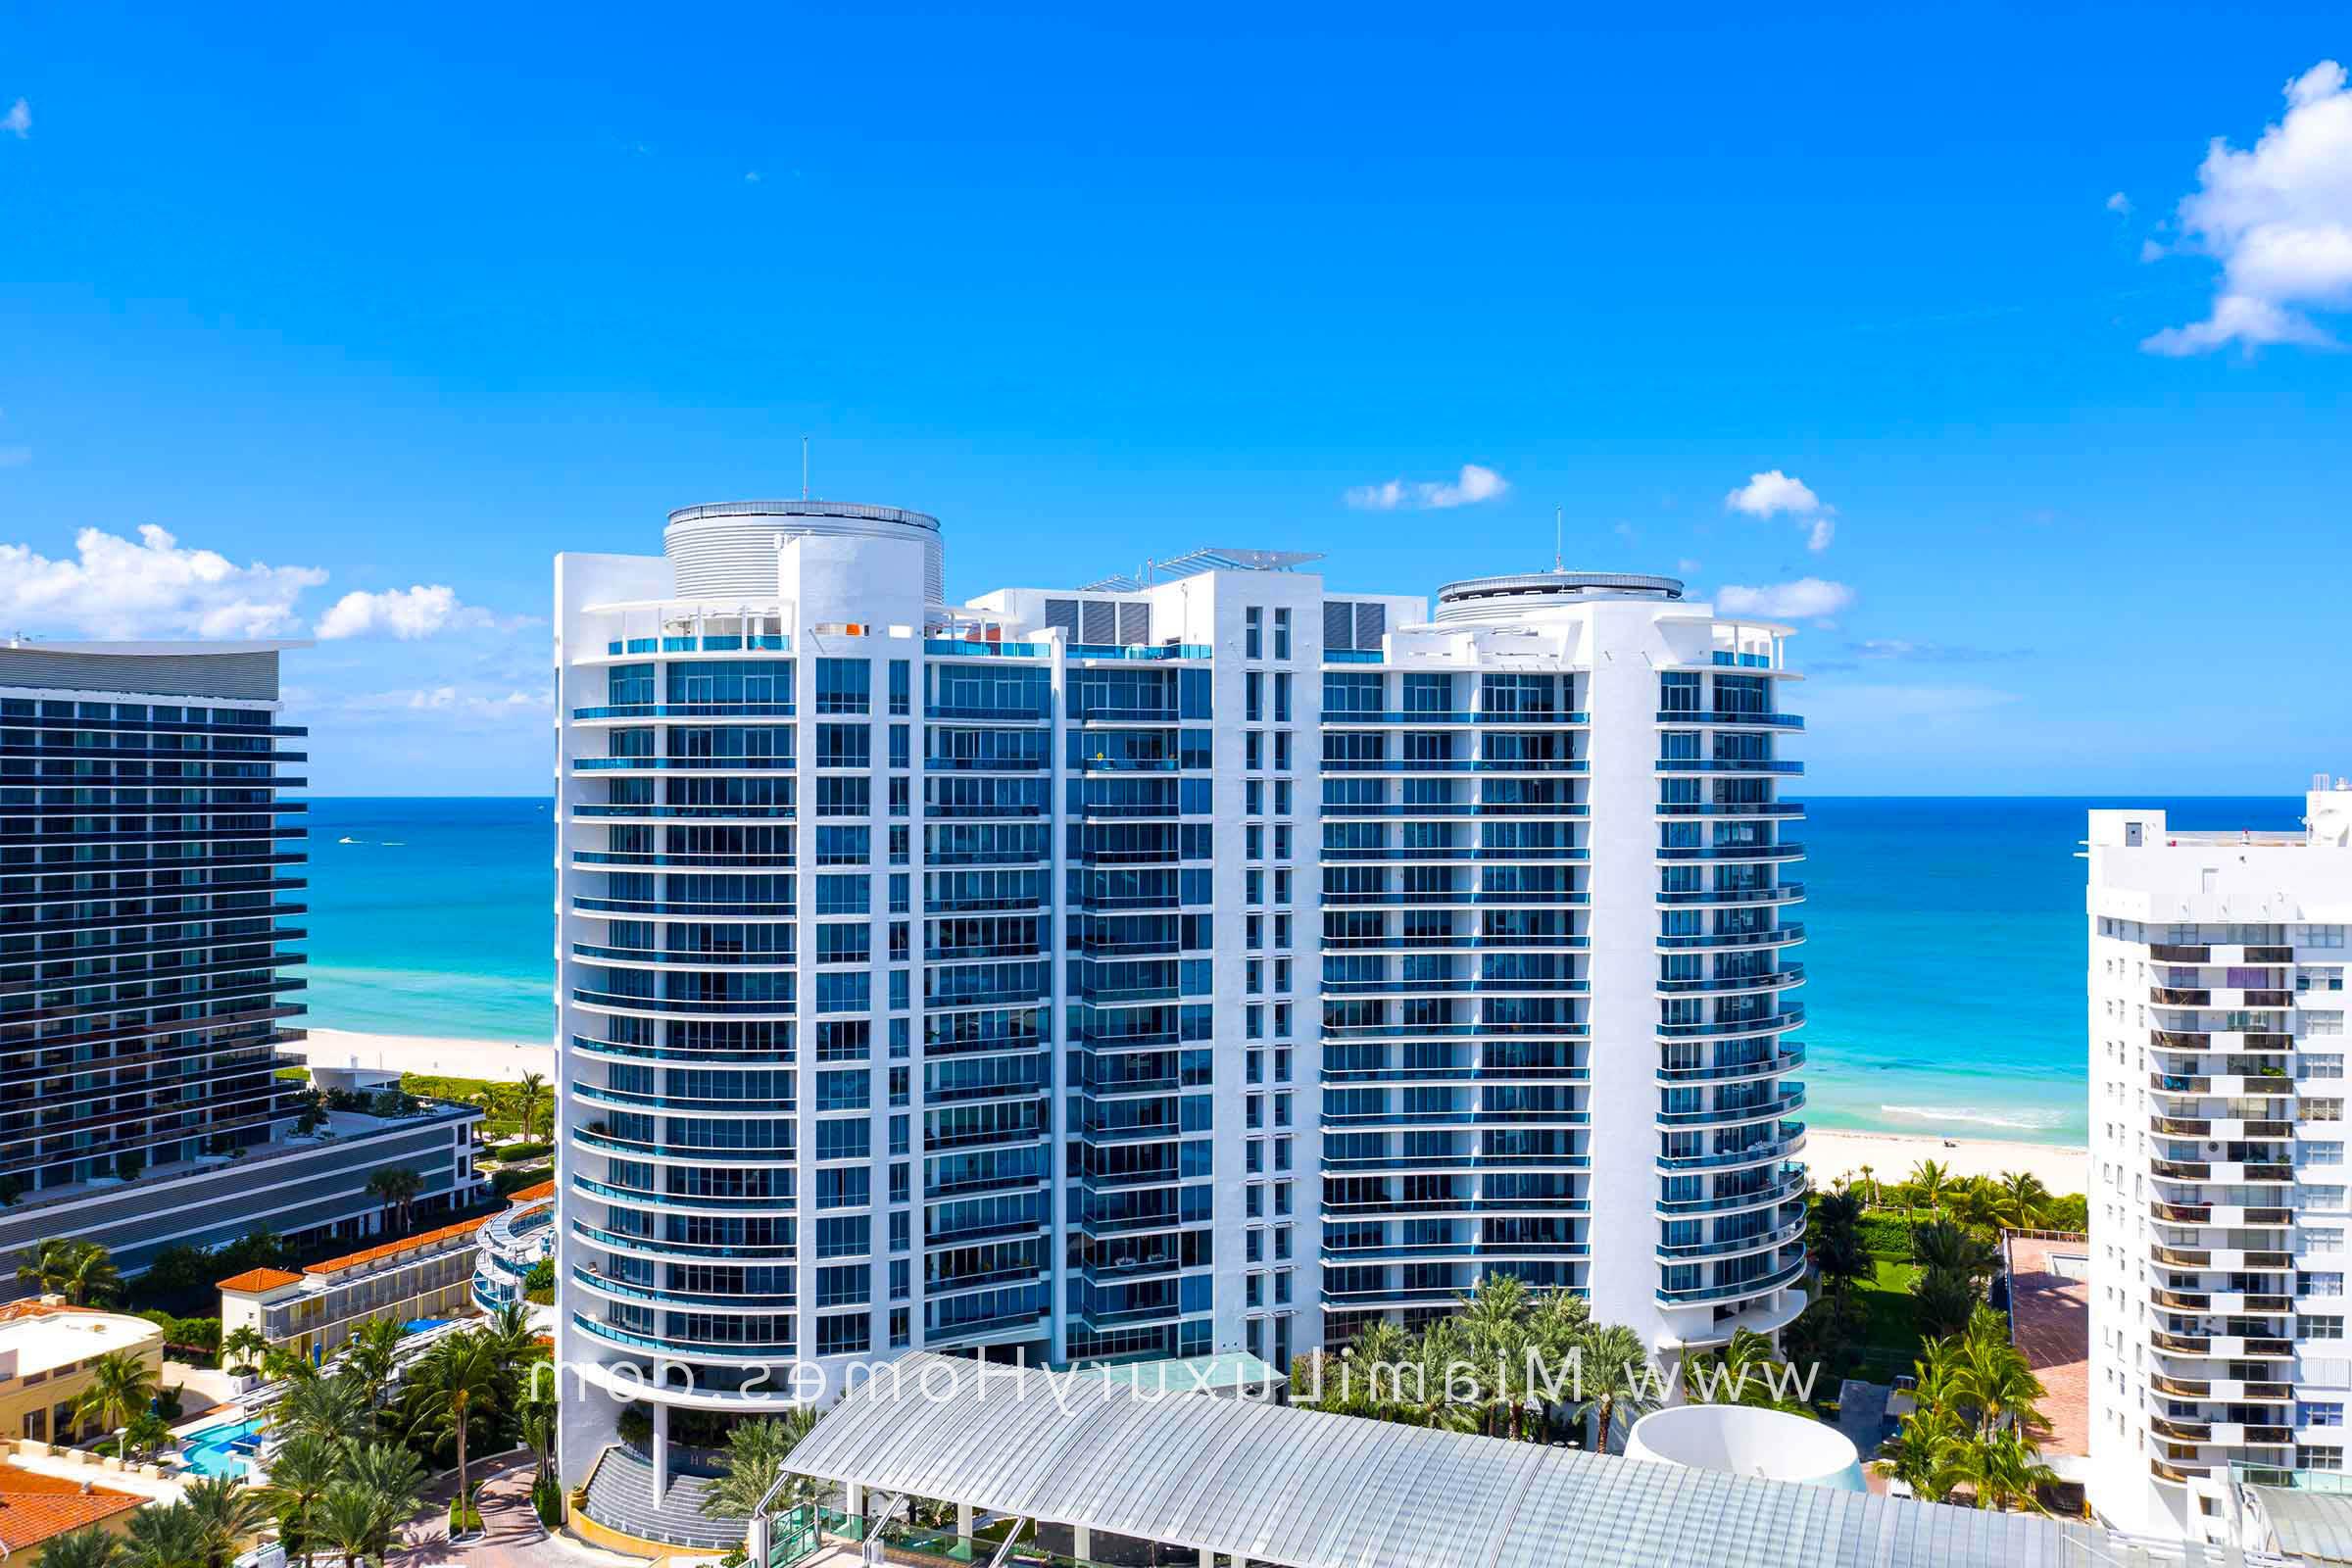 The Bath Club Residences in Miami Beach